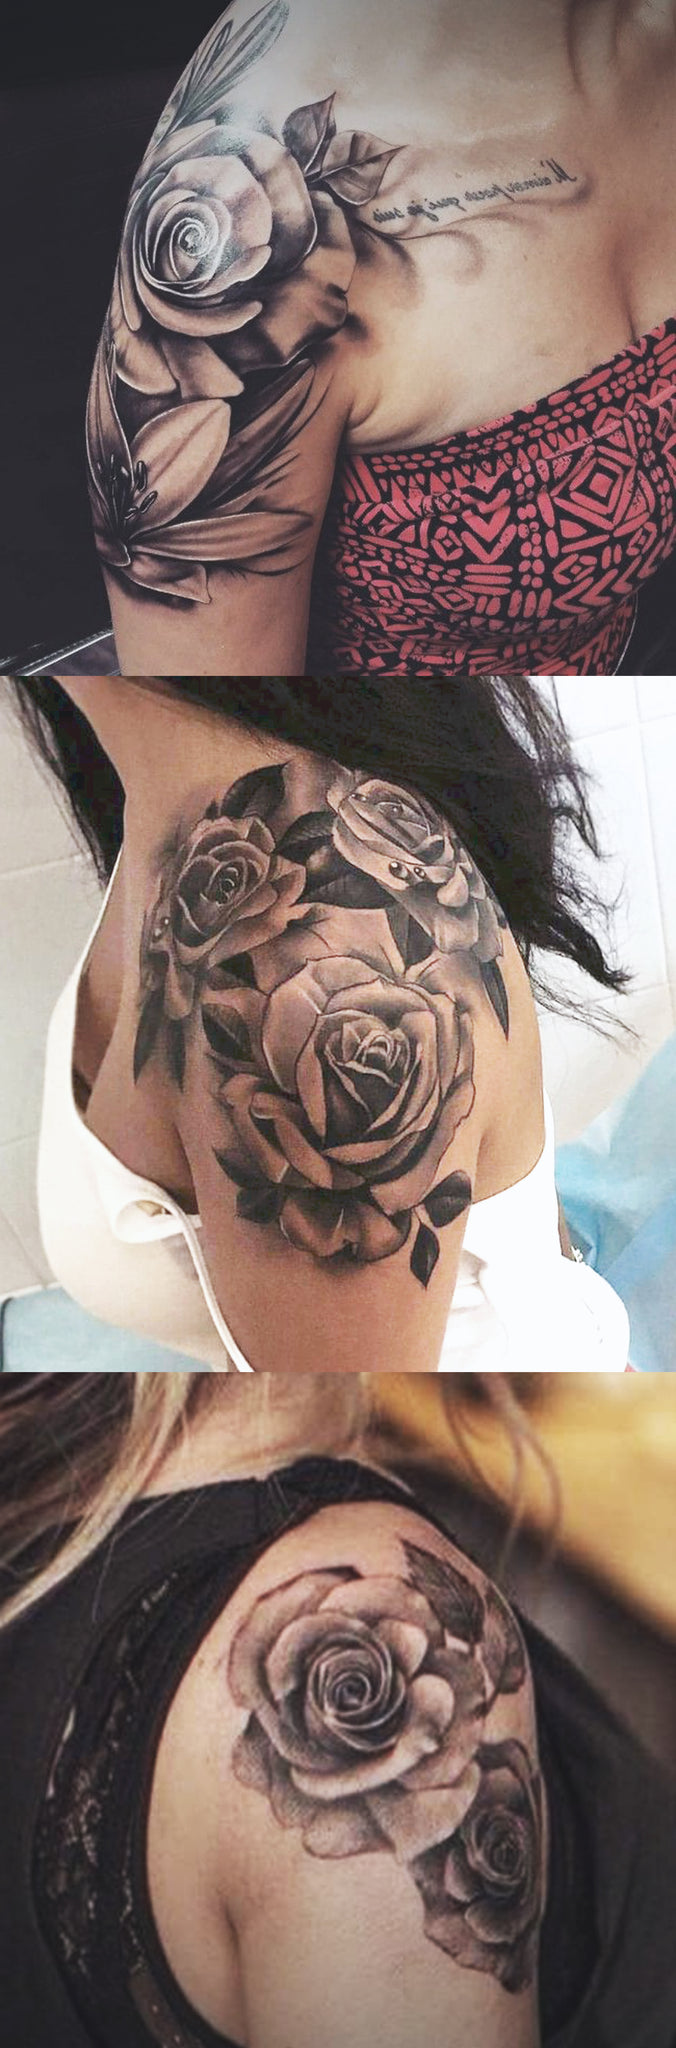 Women's Rose Shoulder Tattoo Ideas in Black and White Realistic Left Floral Arm Sleeve Tatouage Ideas Del Tatuaje - www.MyBodiArt.com